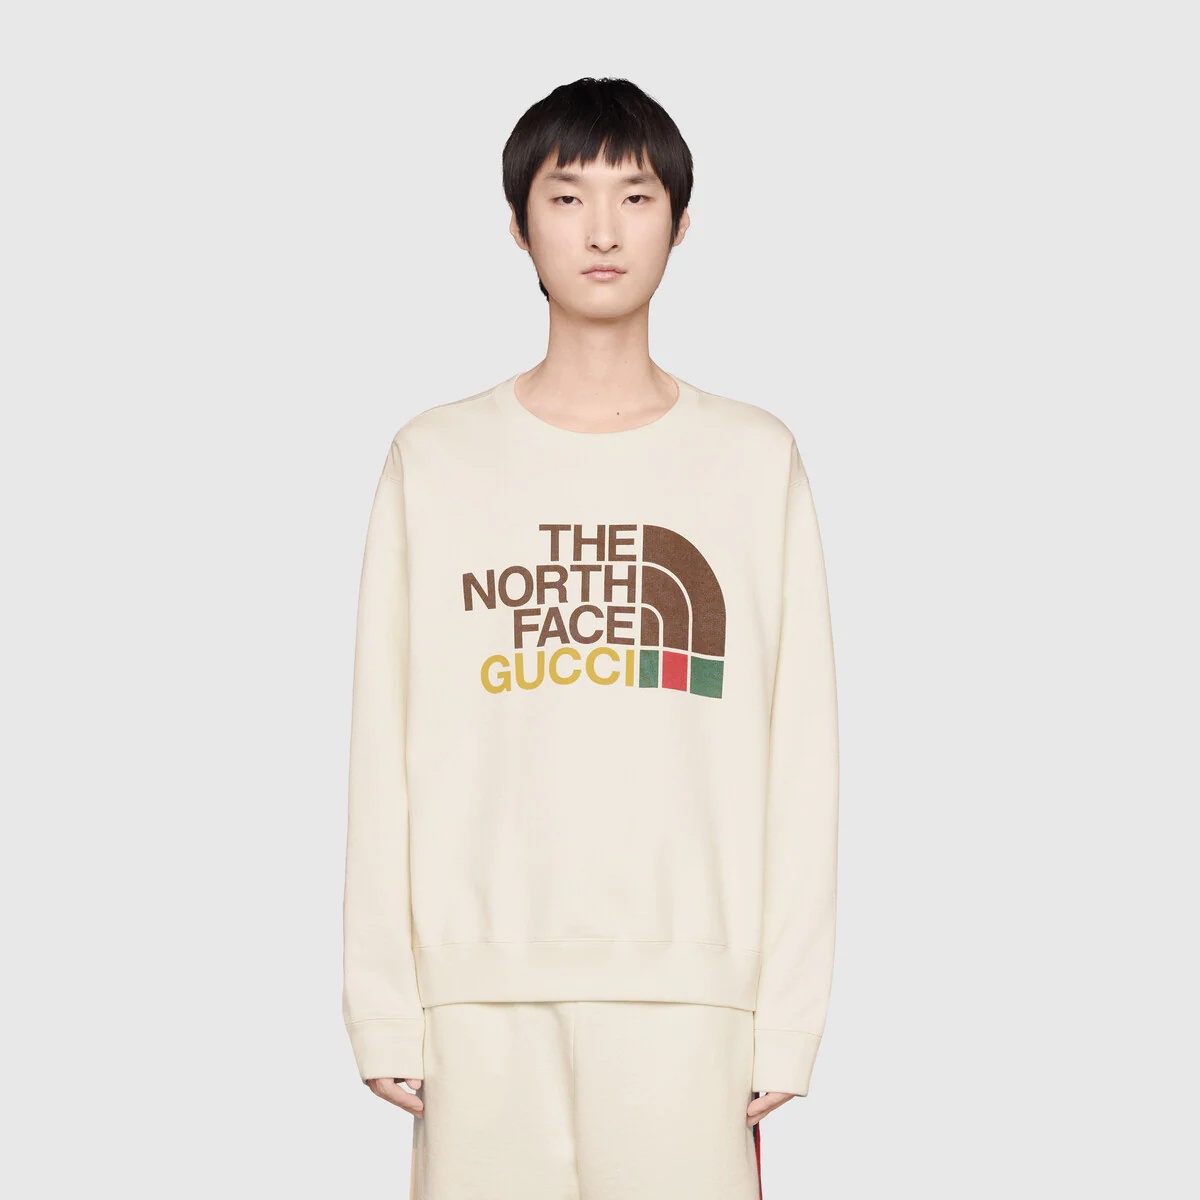 The North Face x Gucci cotton sweatshirt - 3